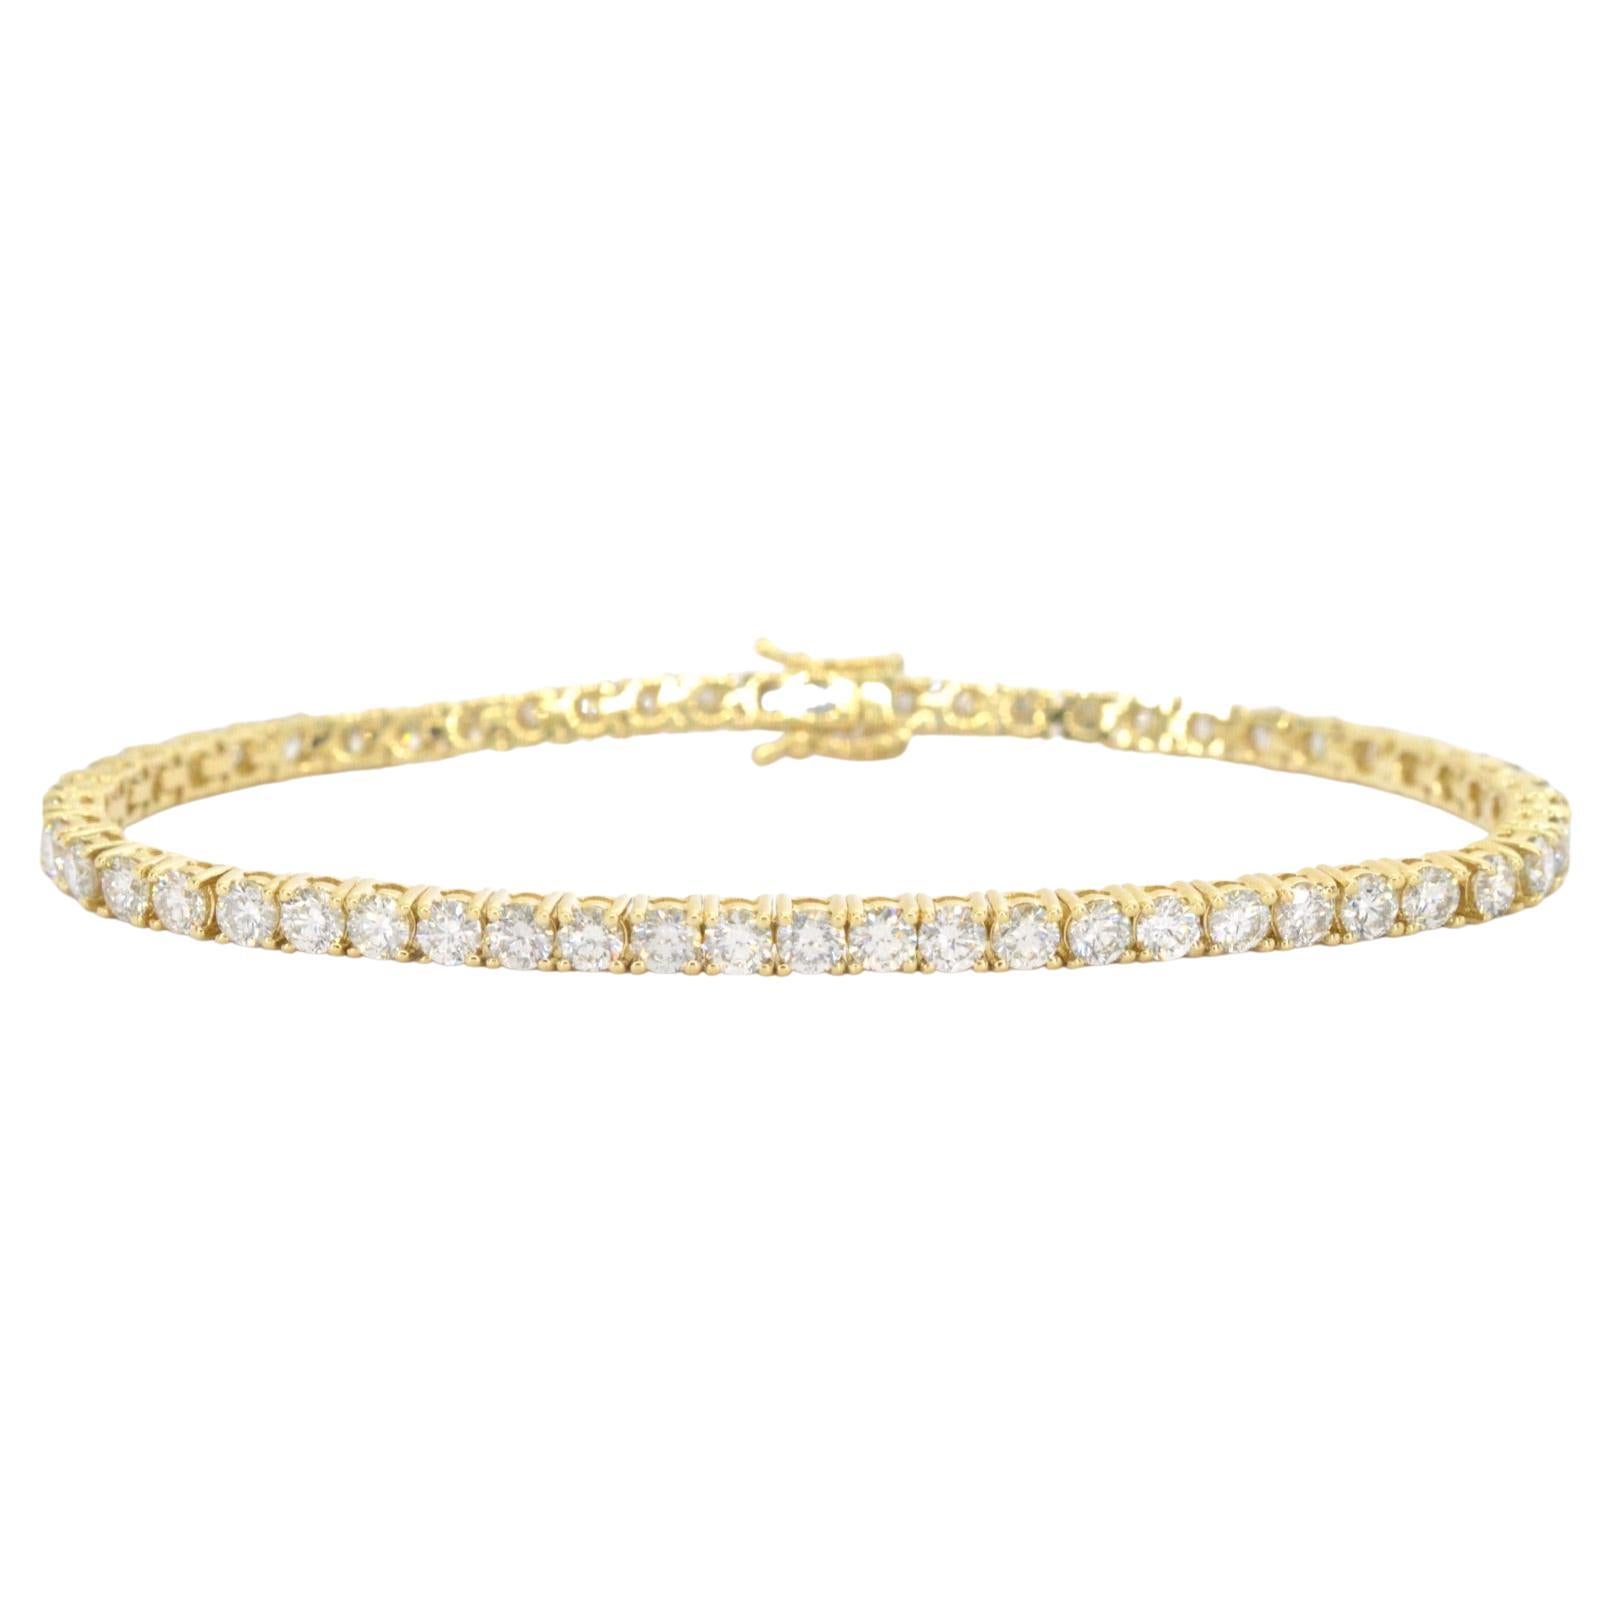 Golden Tennis Bracelet with 6.50 Carat Diamonds